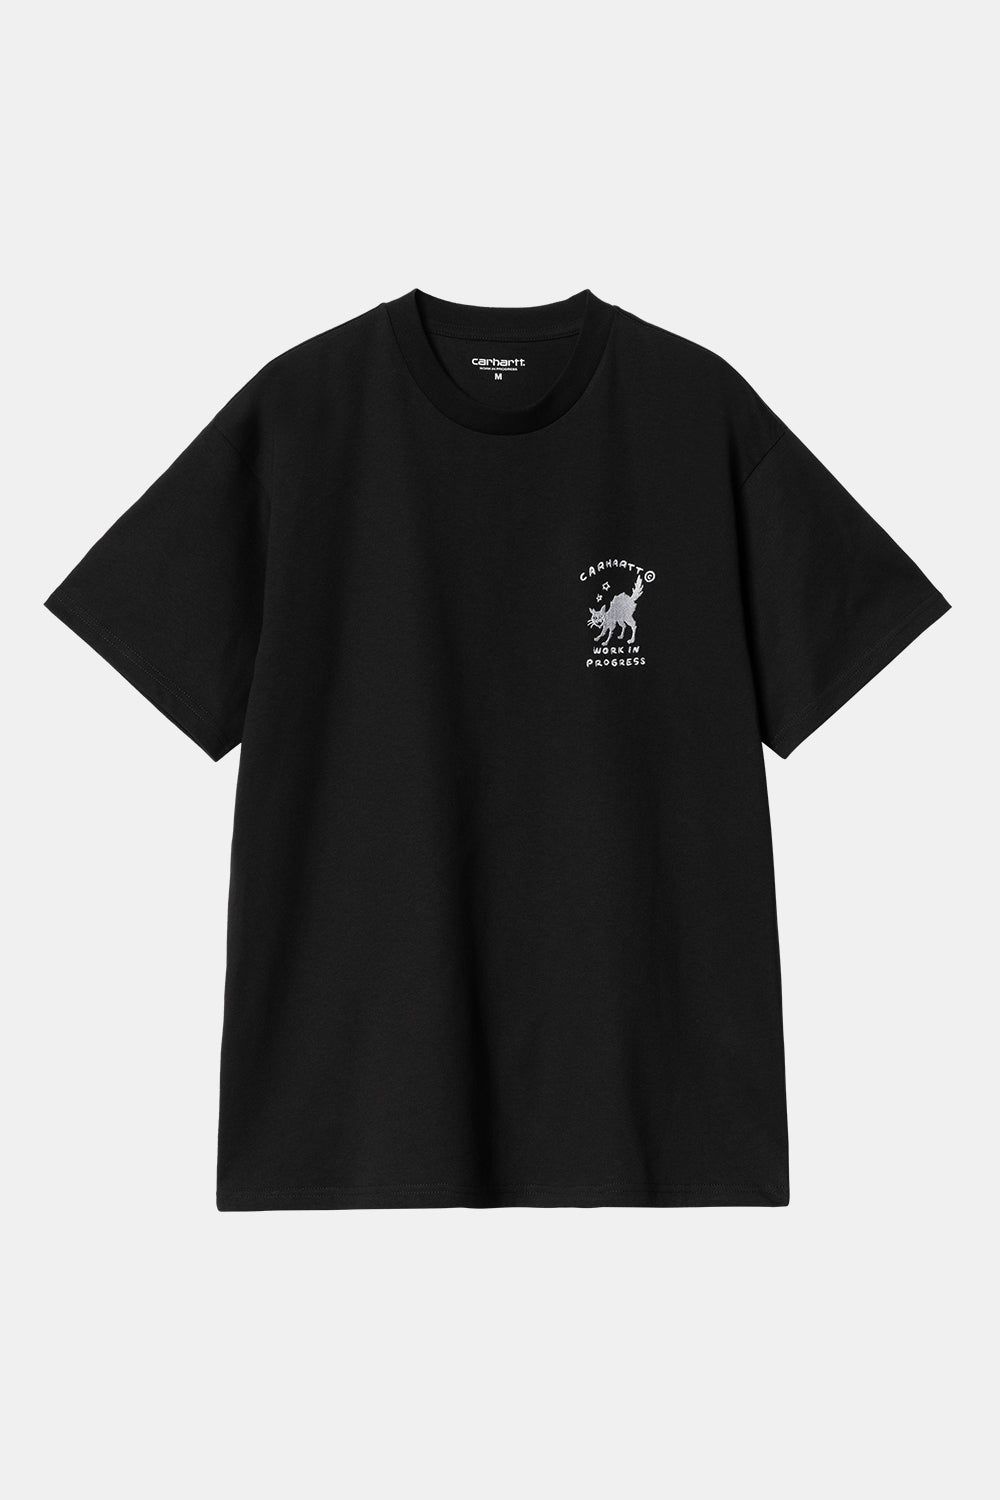 Carhartt WIP Short Sleeve Icons T-Shirt (Black/White)